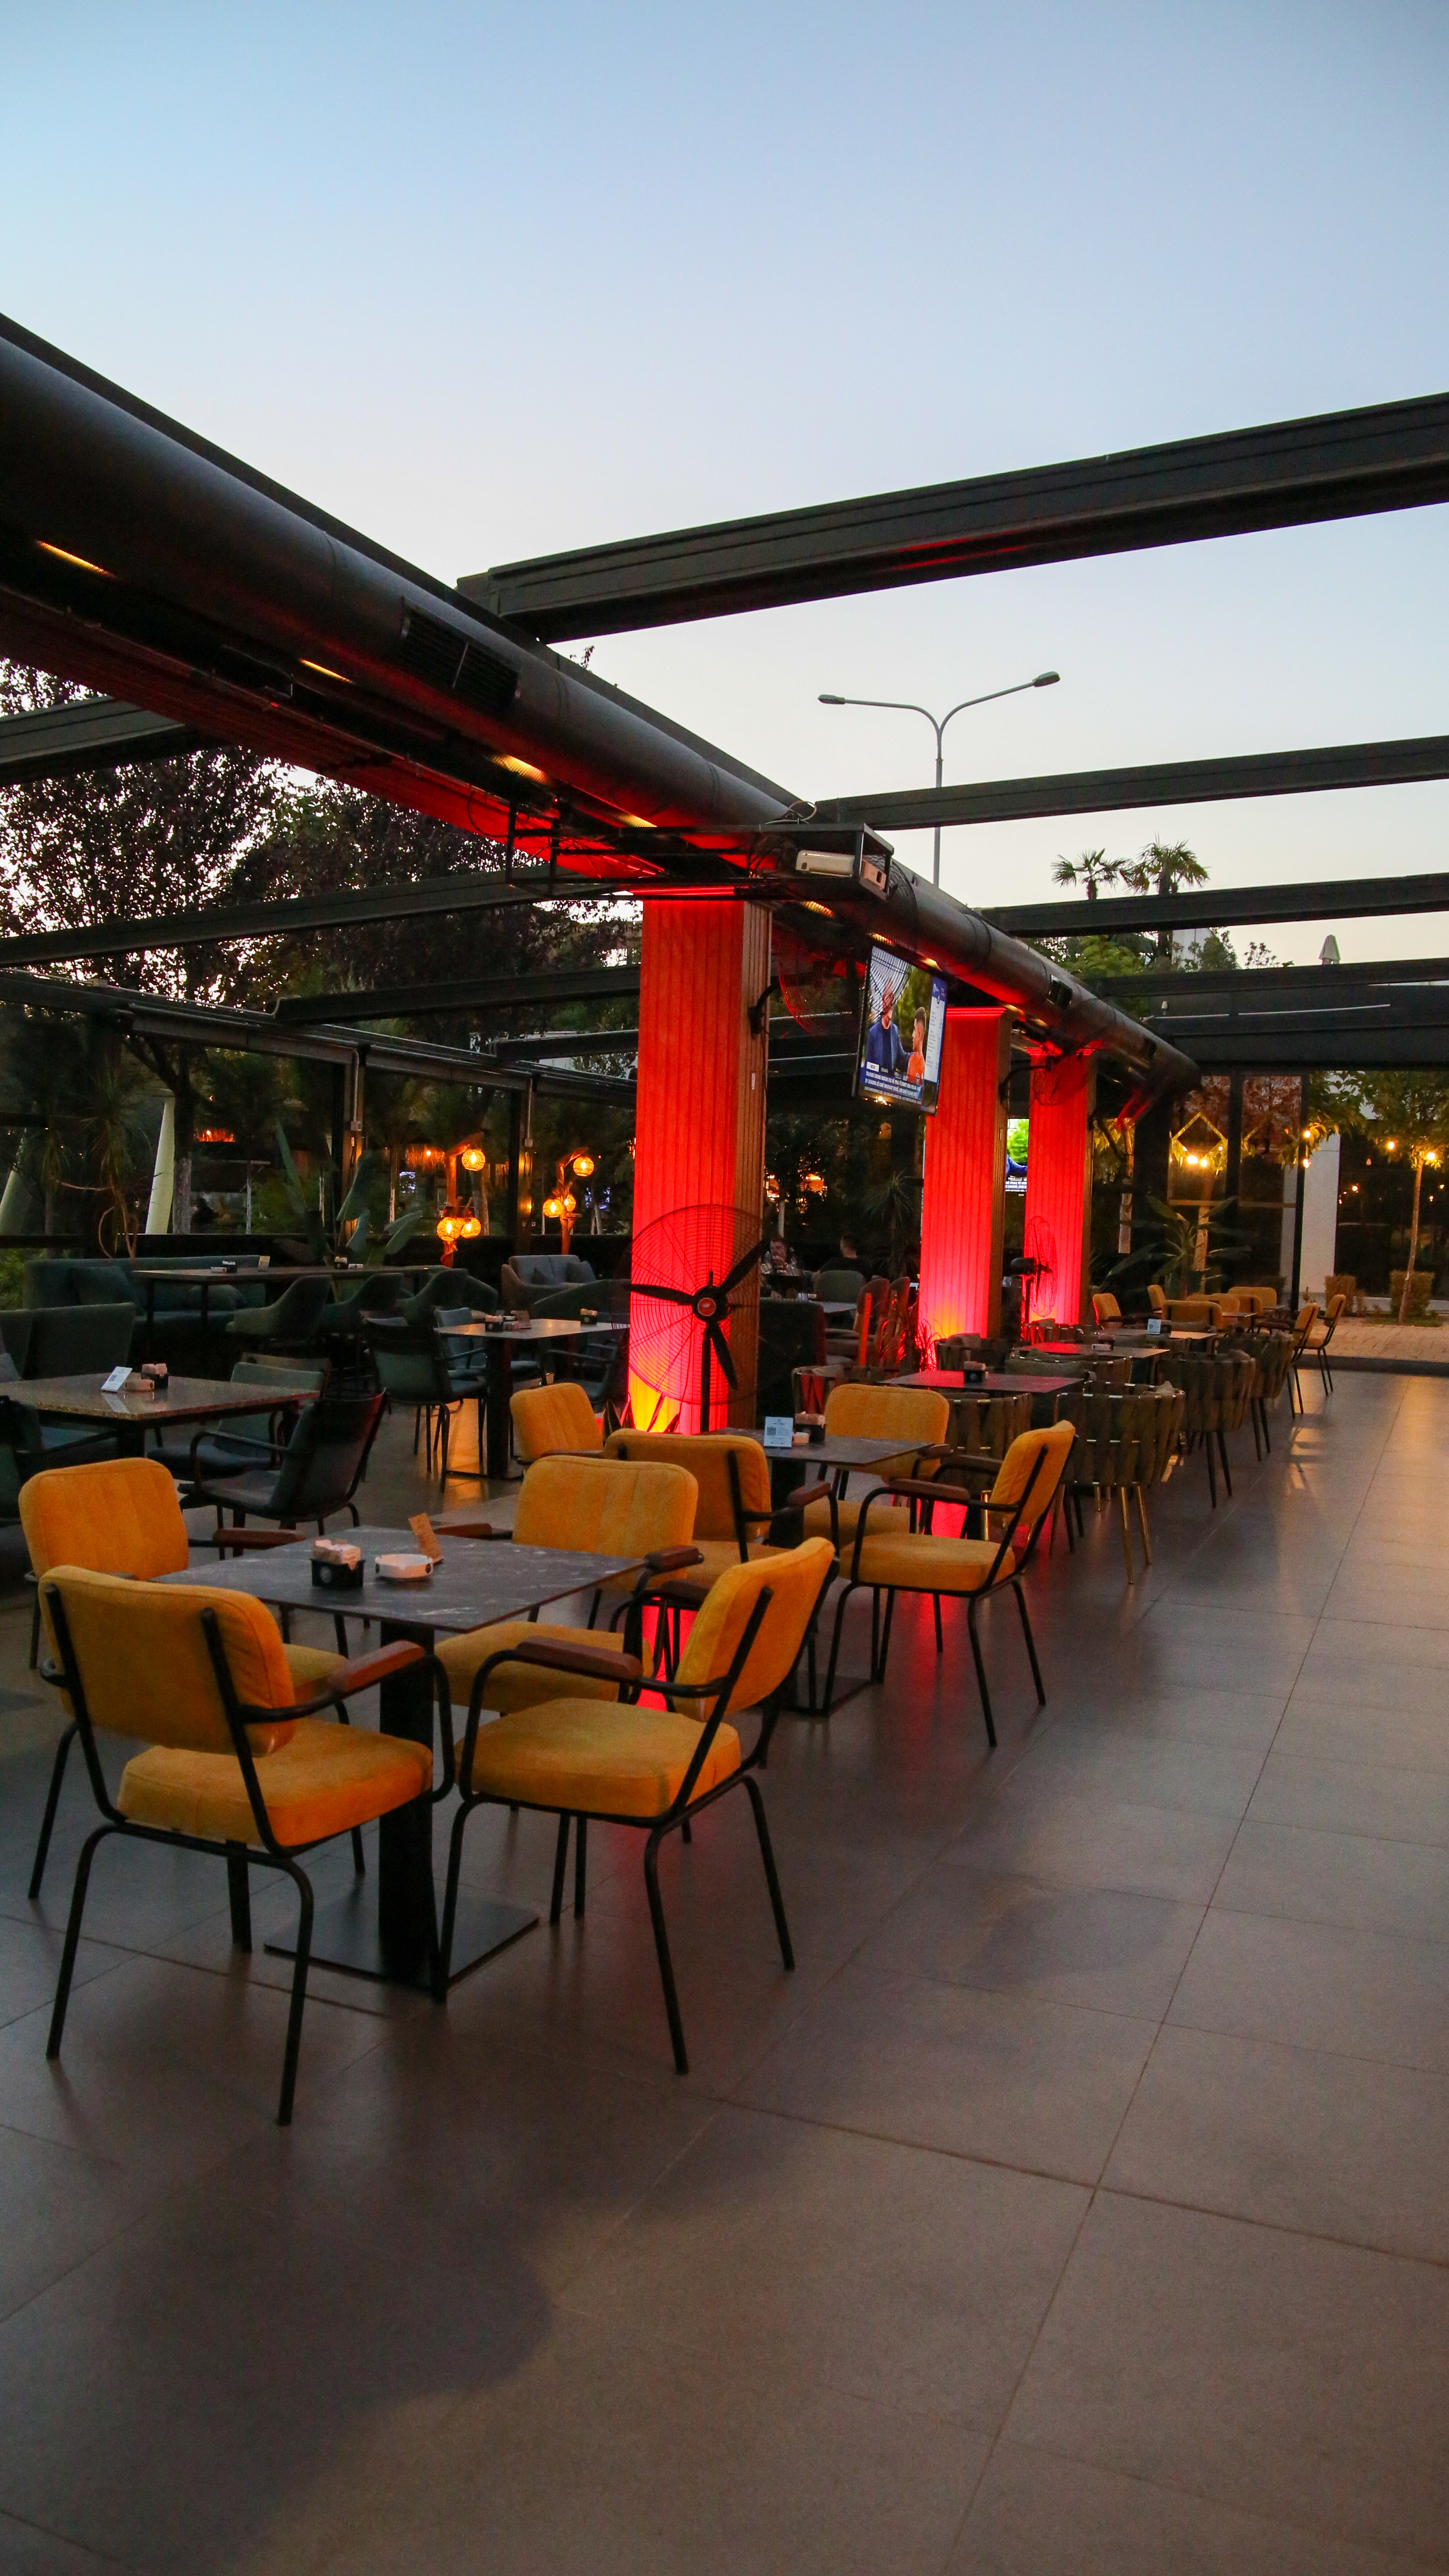 Hotel with Restaurant